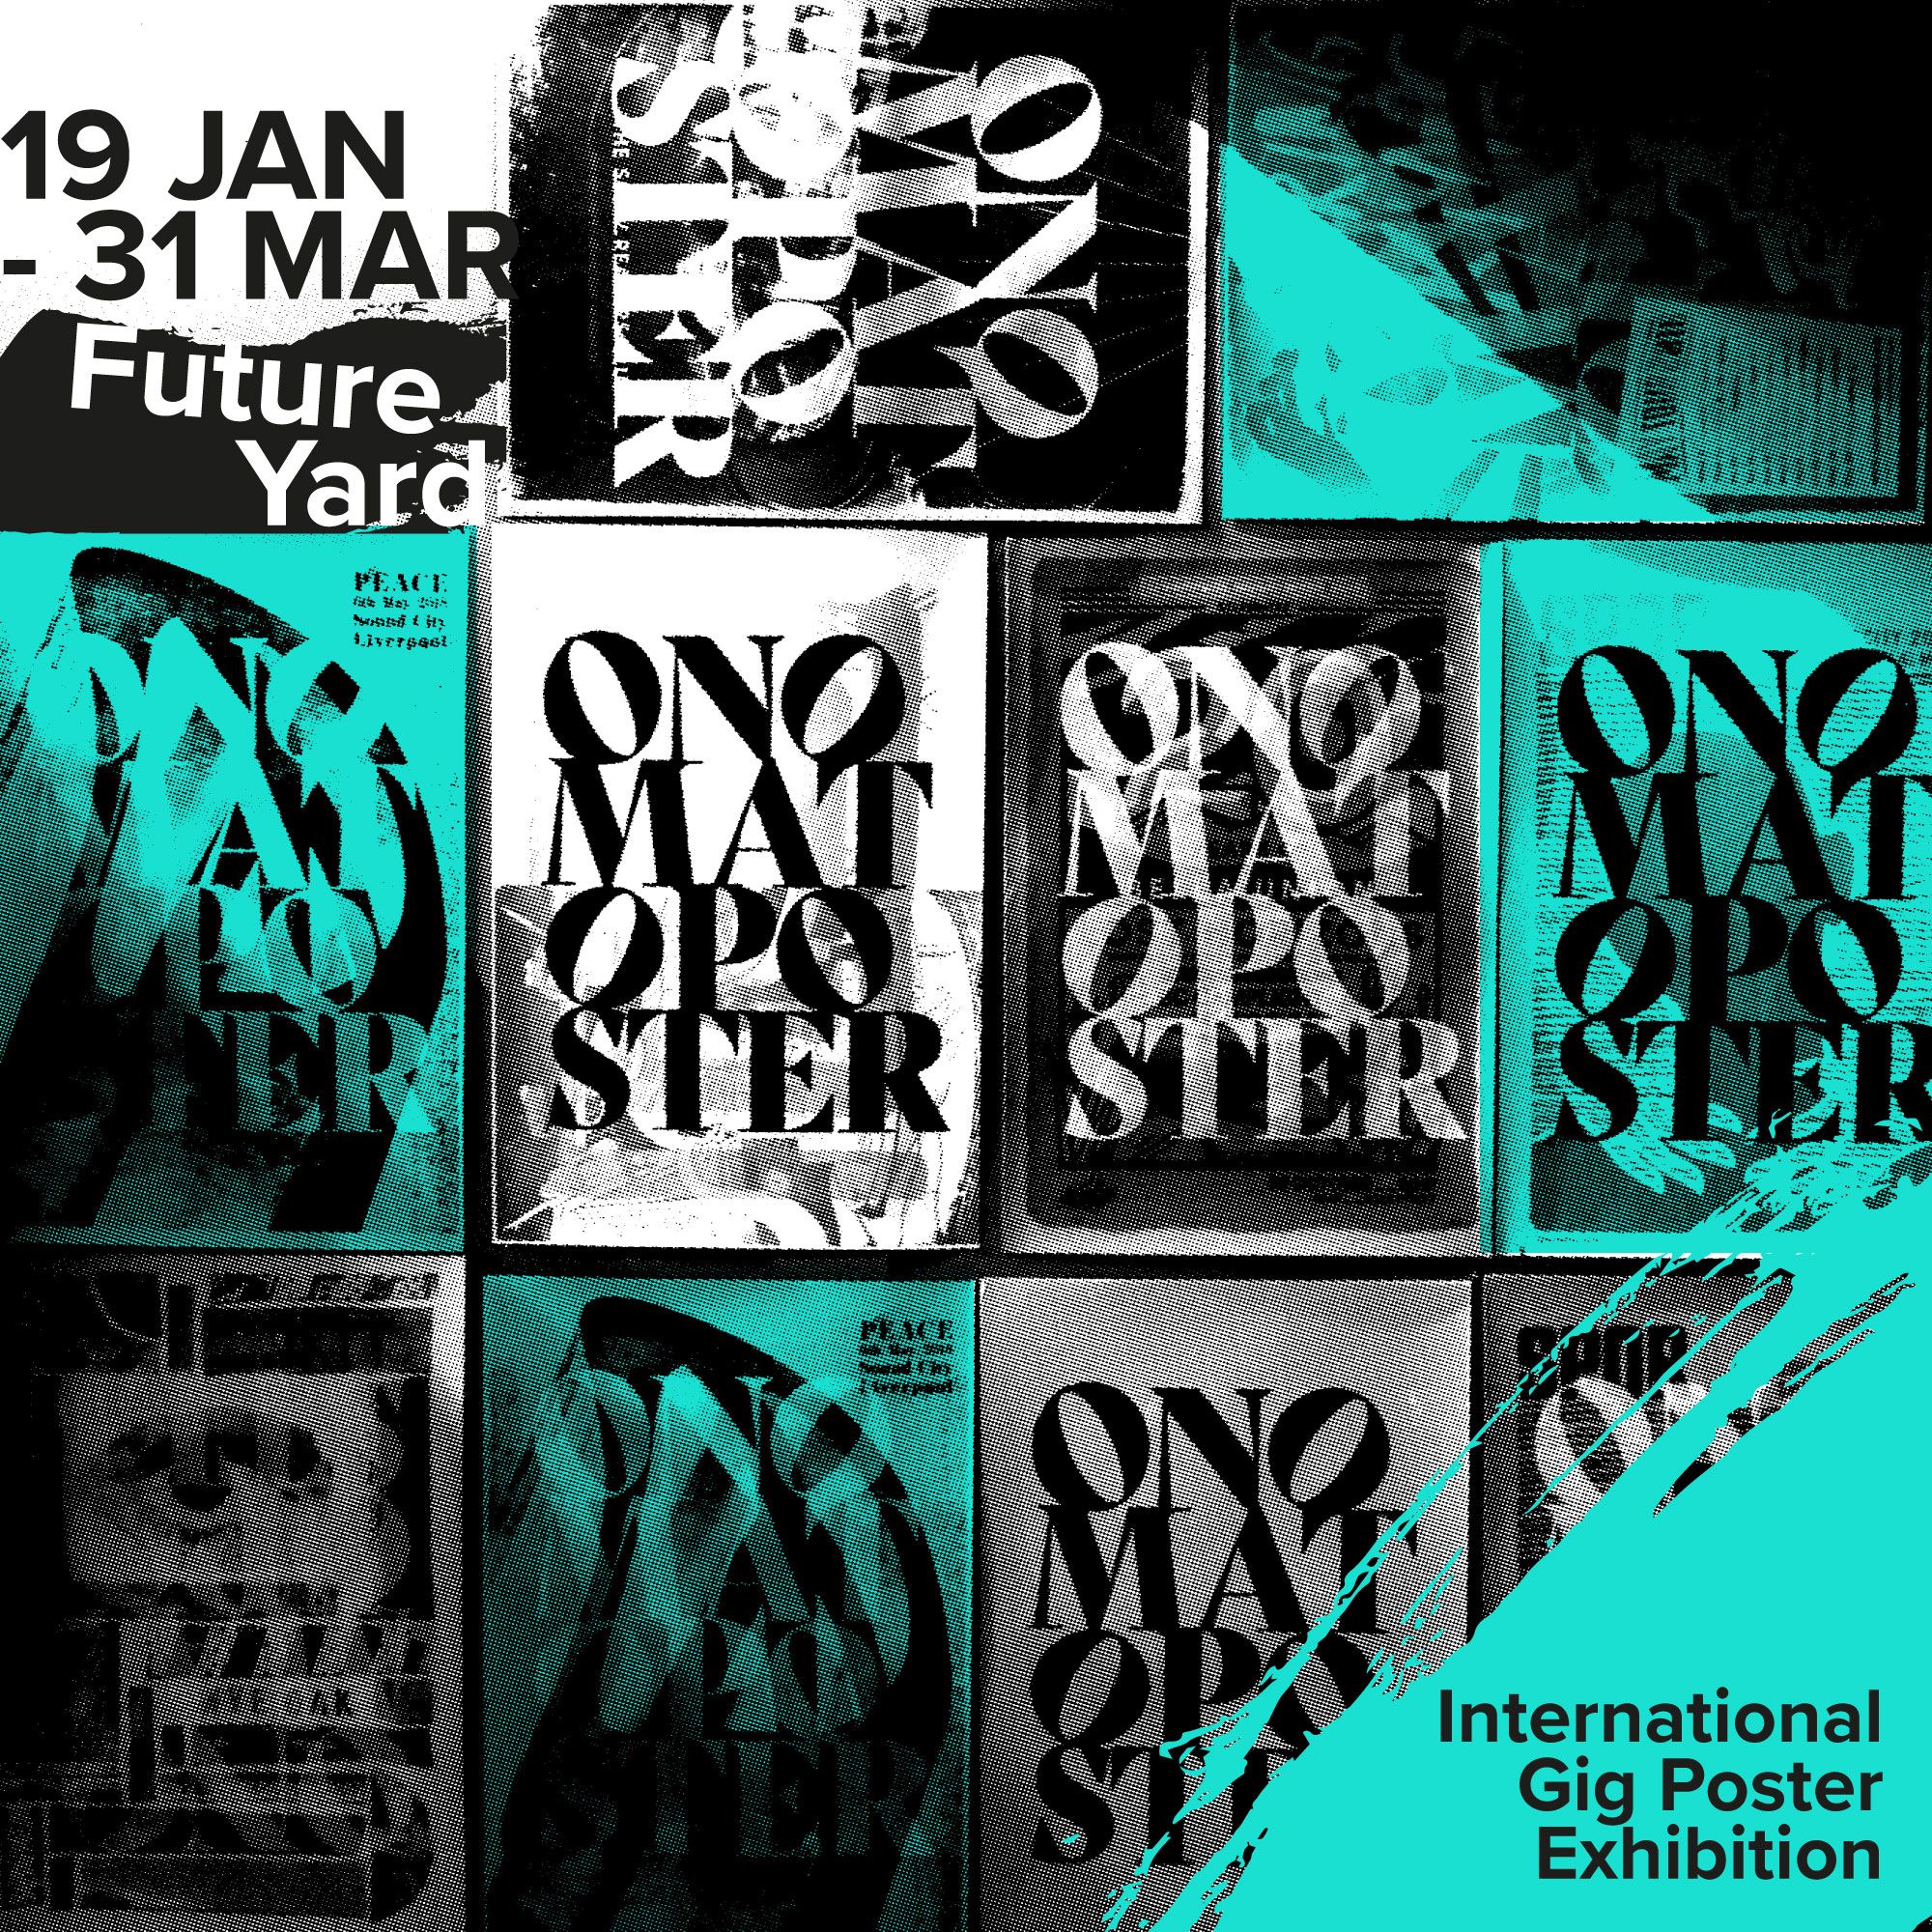 Onomatoposter international gig poster exhibition at Future yard January 2024